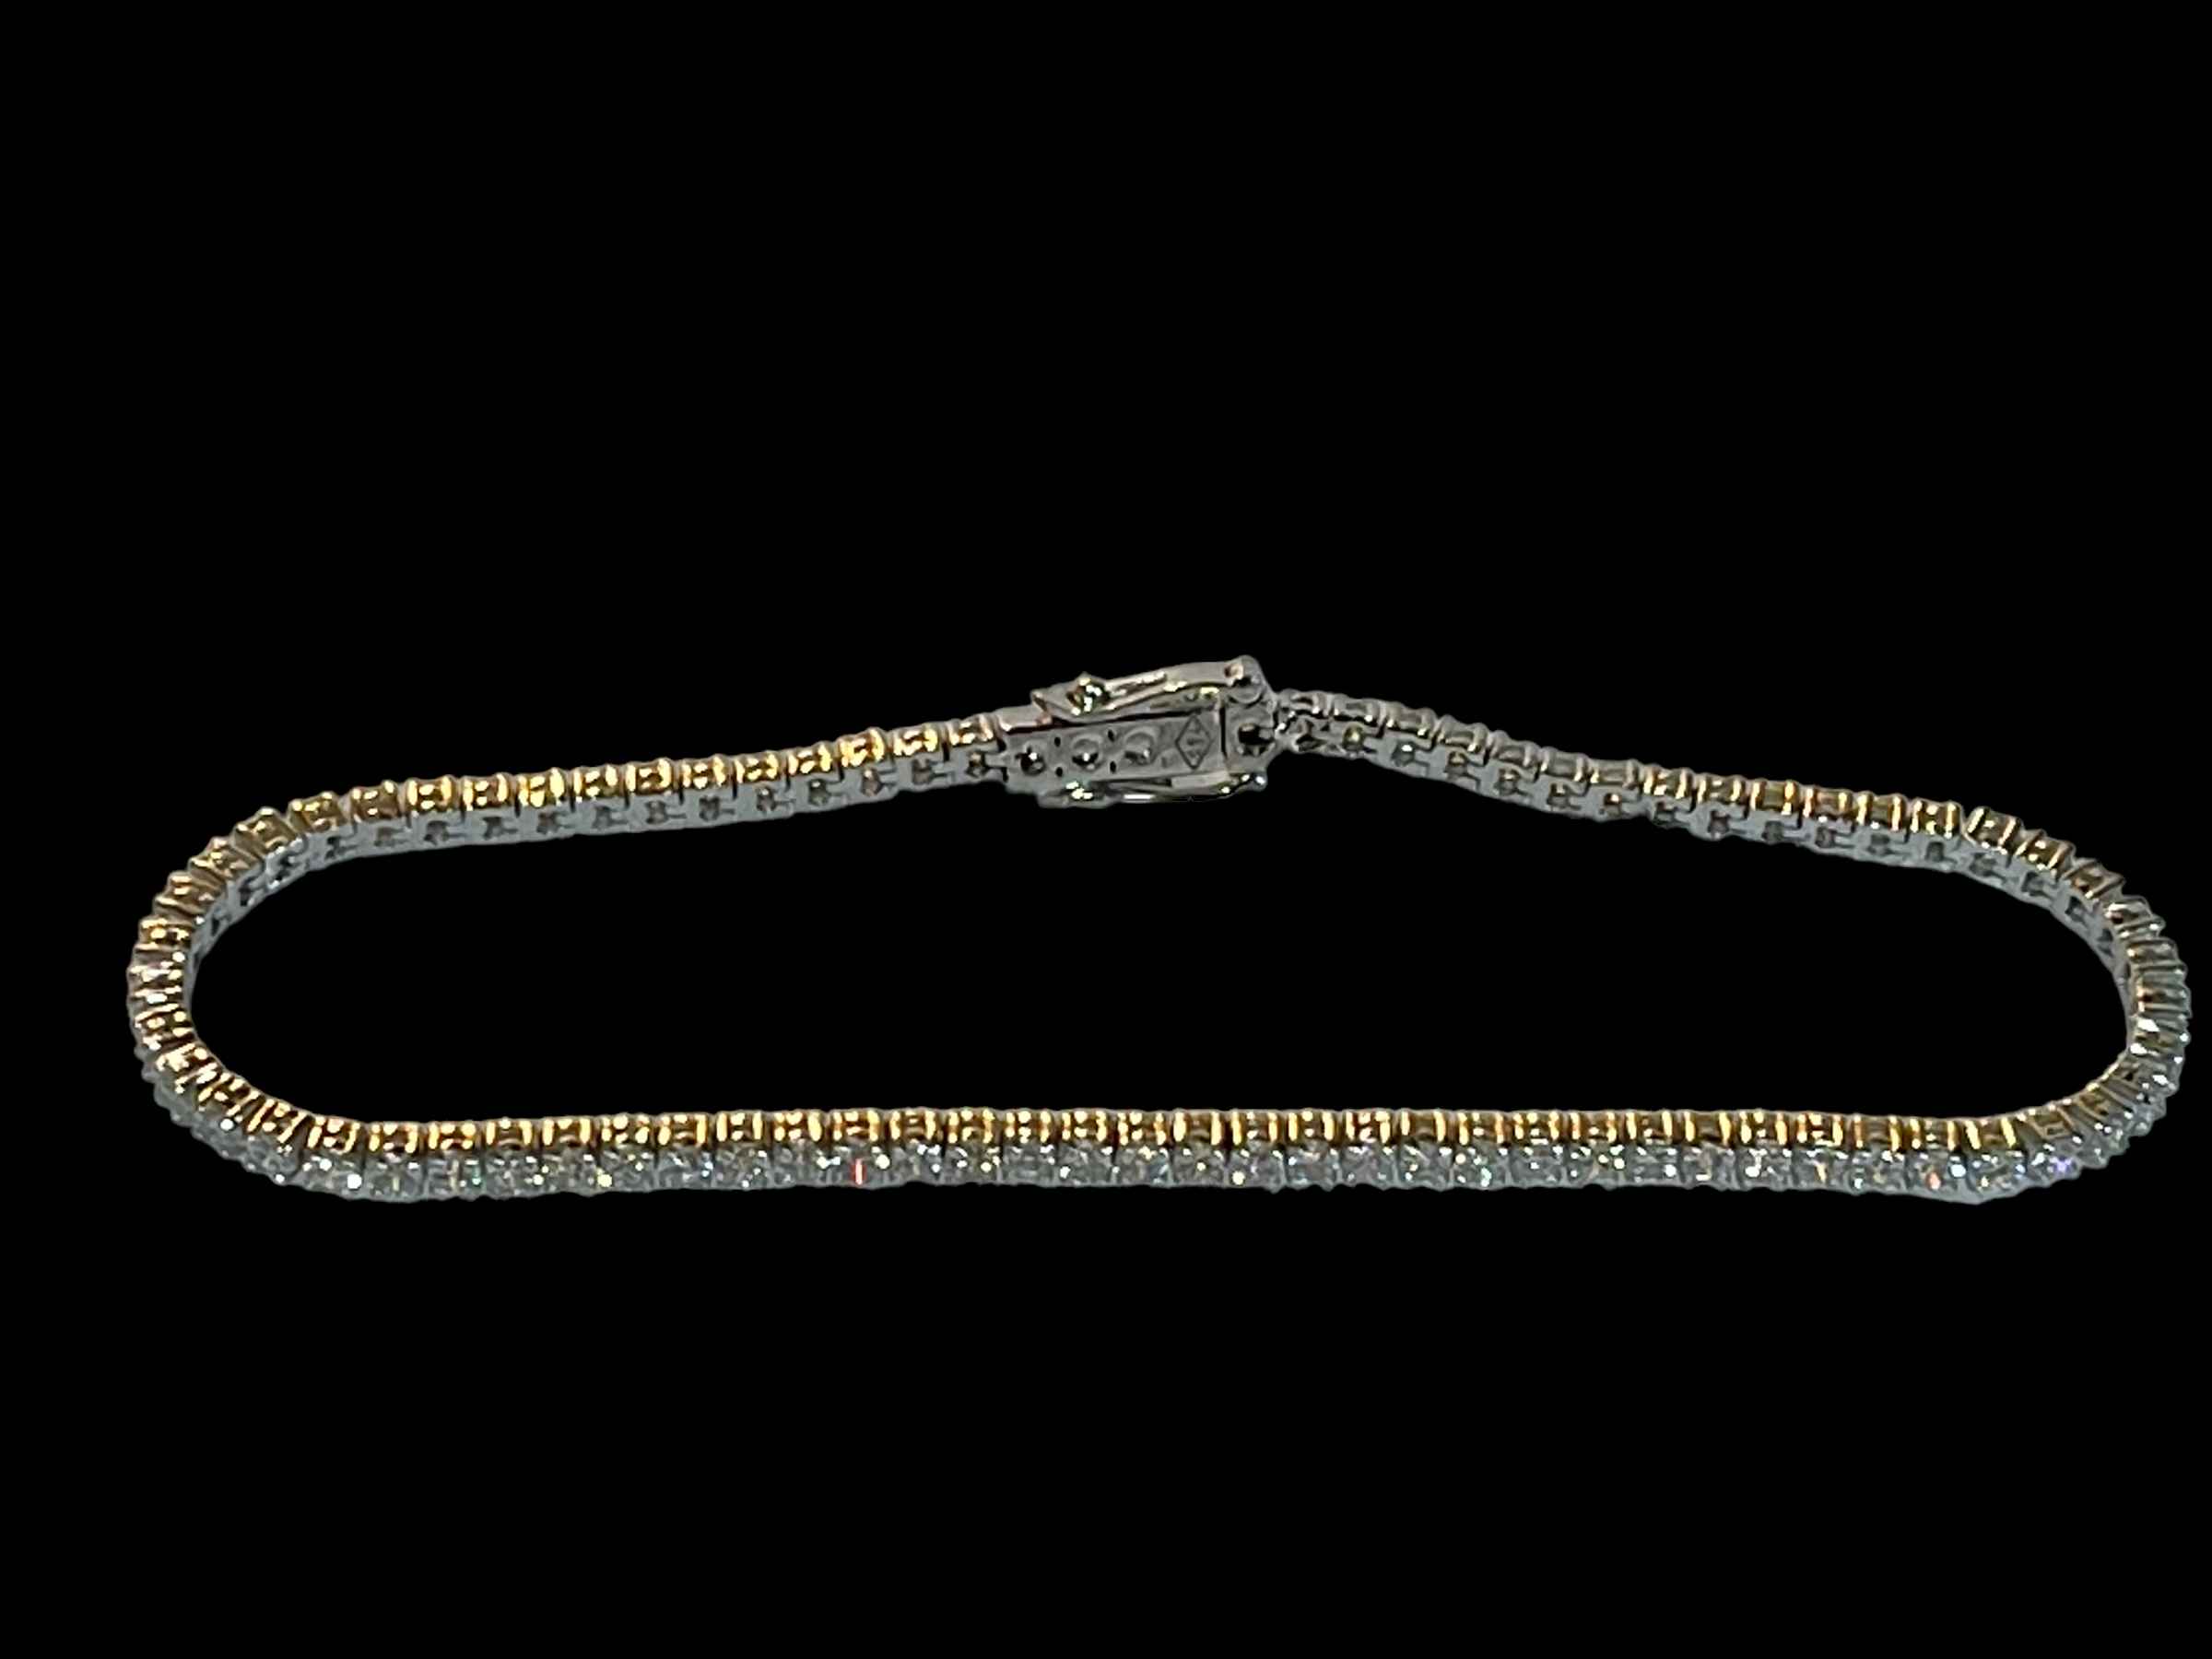 18 carat white gold and diamond tennis bracelet, diamond content over 3 carats.